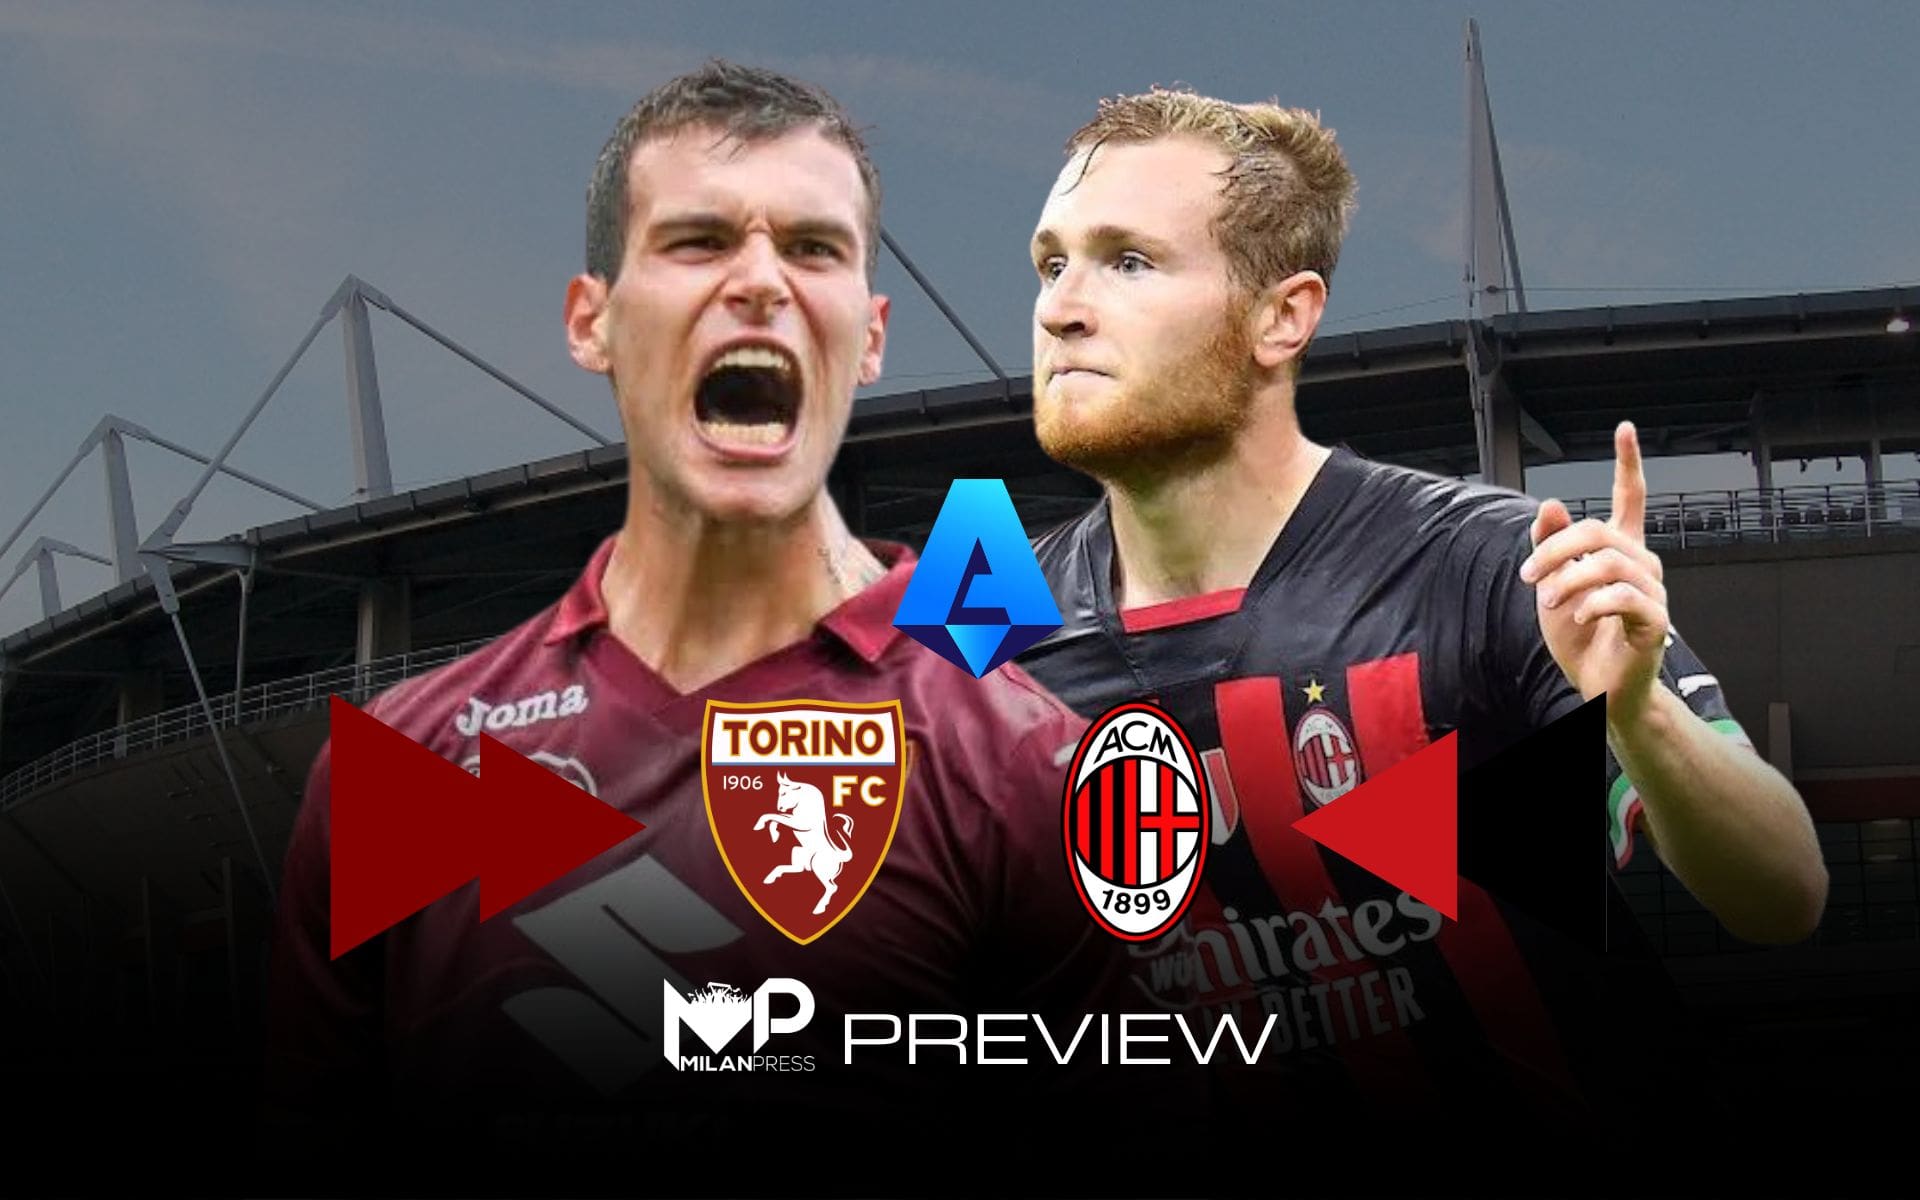 Torino-Milan Preview - MilanPress, robe dell'altro diavolo